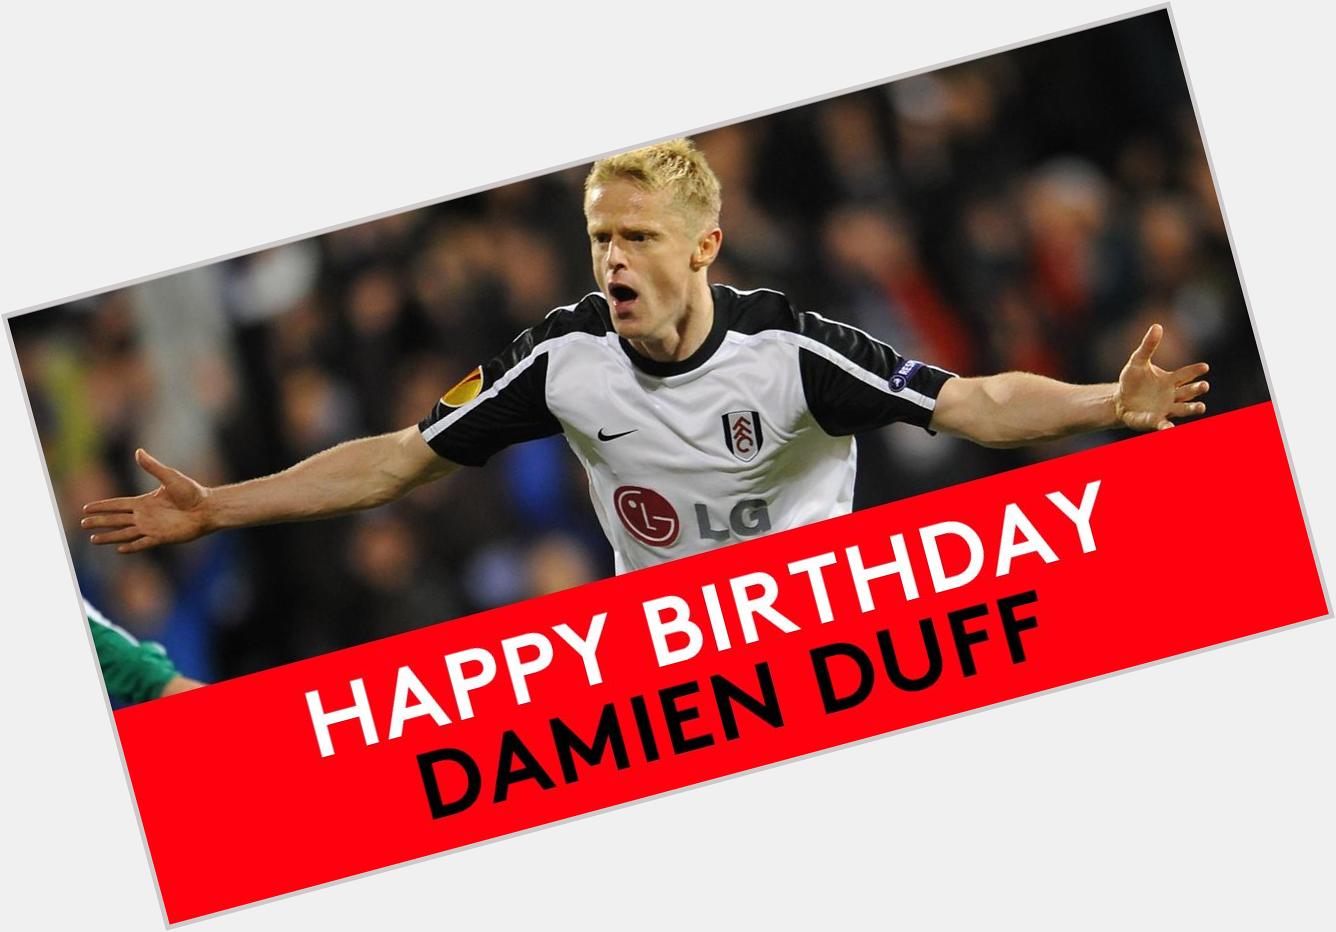 Hitting the big 4 0 ! 

Happy birthday, Damien Duff!  